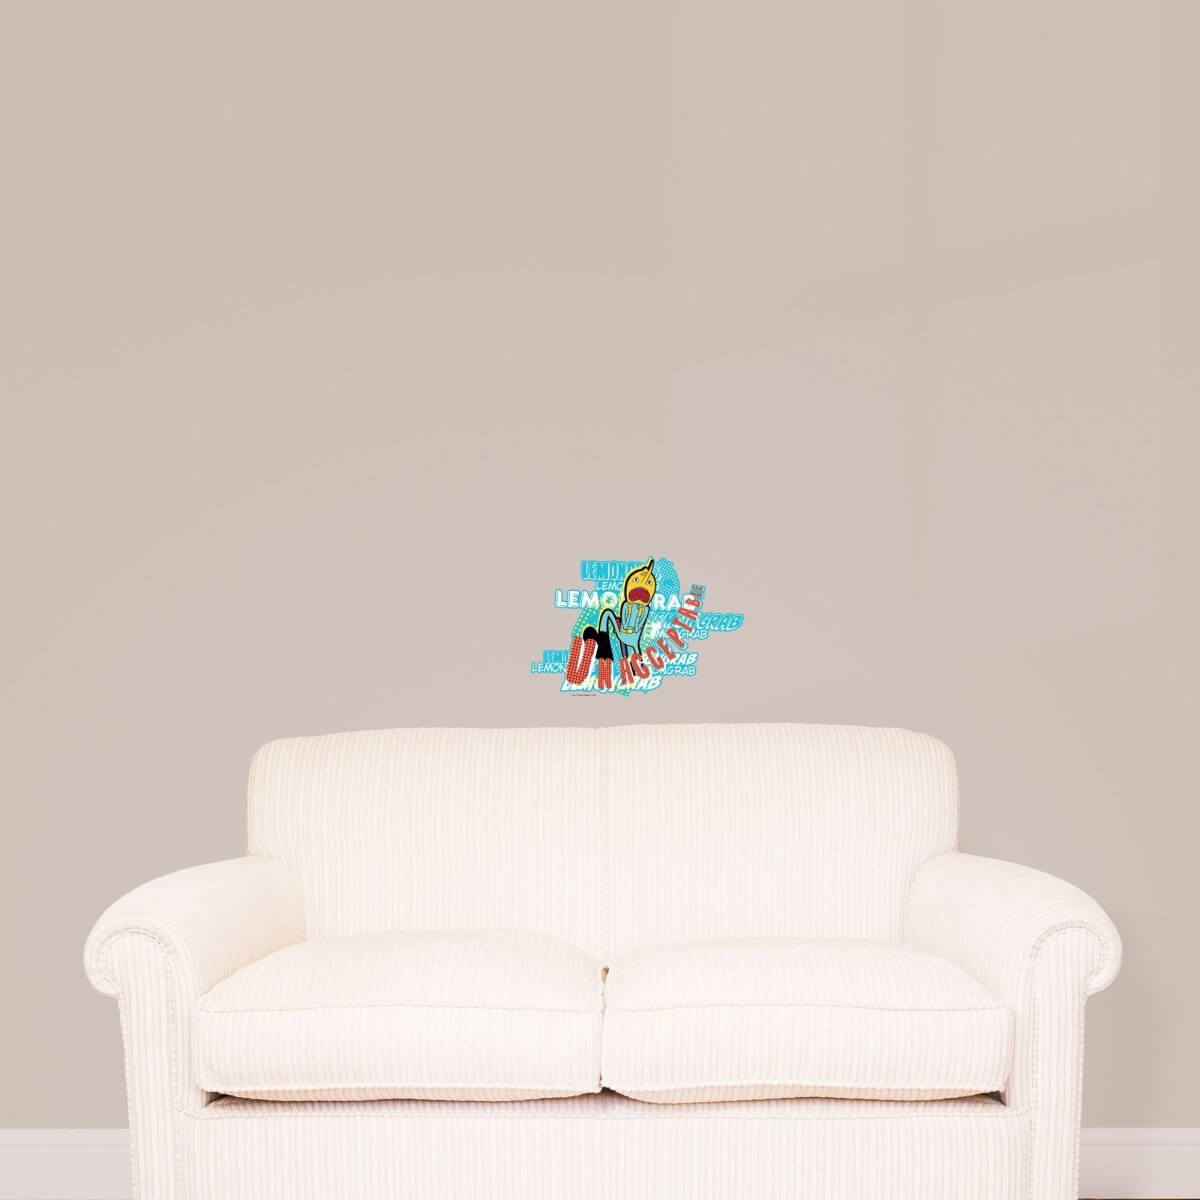 Kismet Decals Adventure Time Earl of Lemongrab Licensed Wall Sticker - Easy DIY Home & Kids Room Decor Wall Decal Art - Kismet Decals